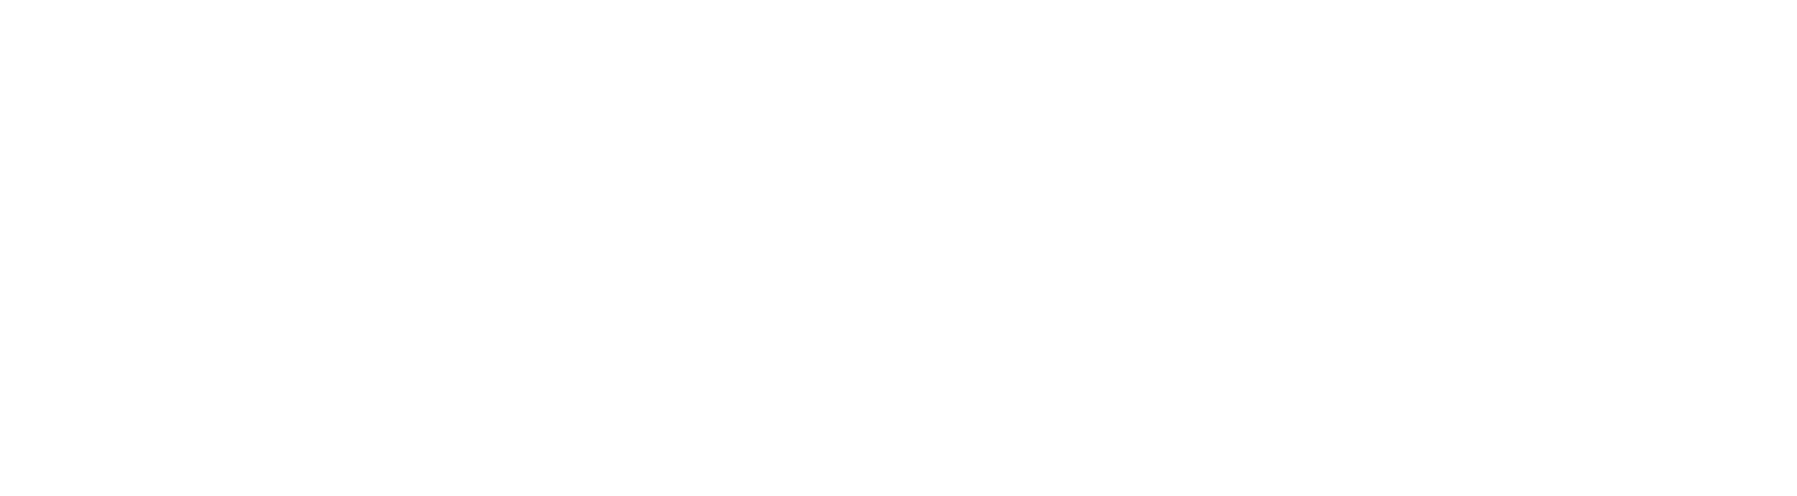 Advanced Life Settlements